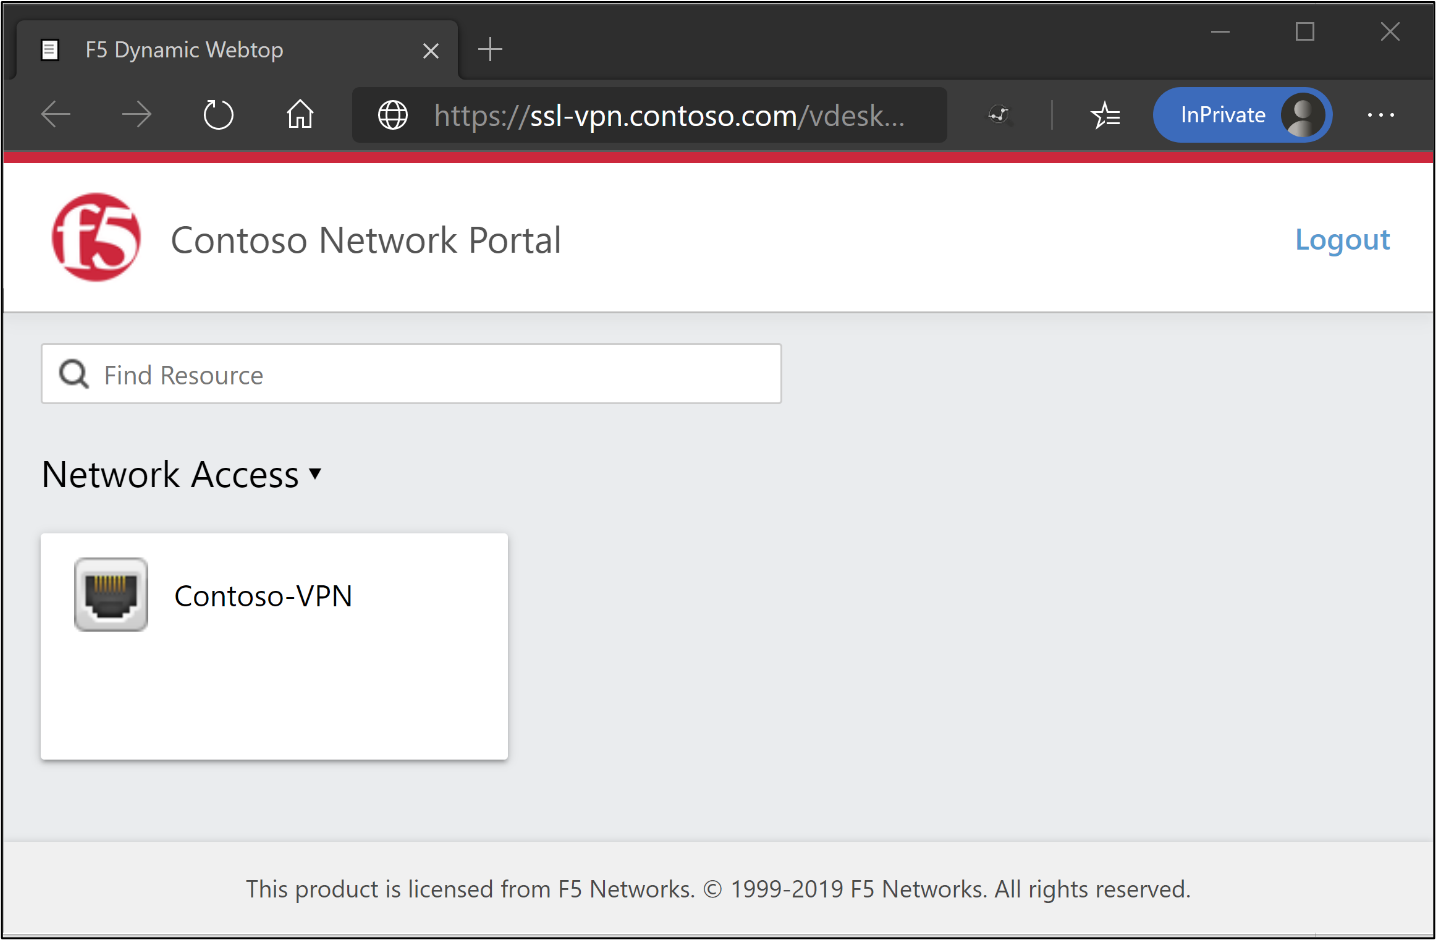 Снимок экрана: страница сетевого портала Contoso с индикатором сетевого доступа.